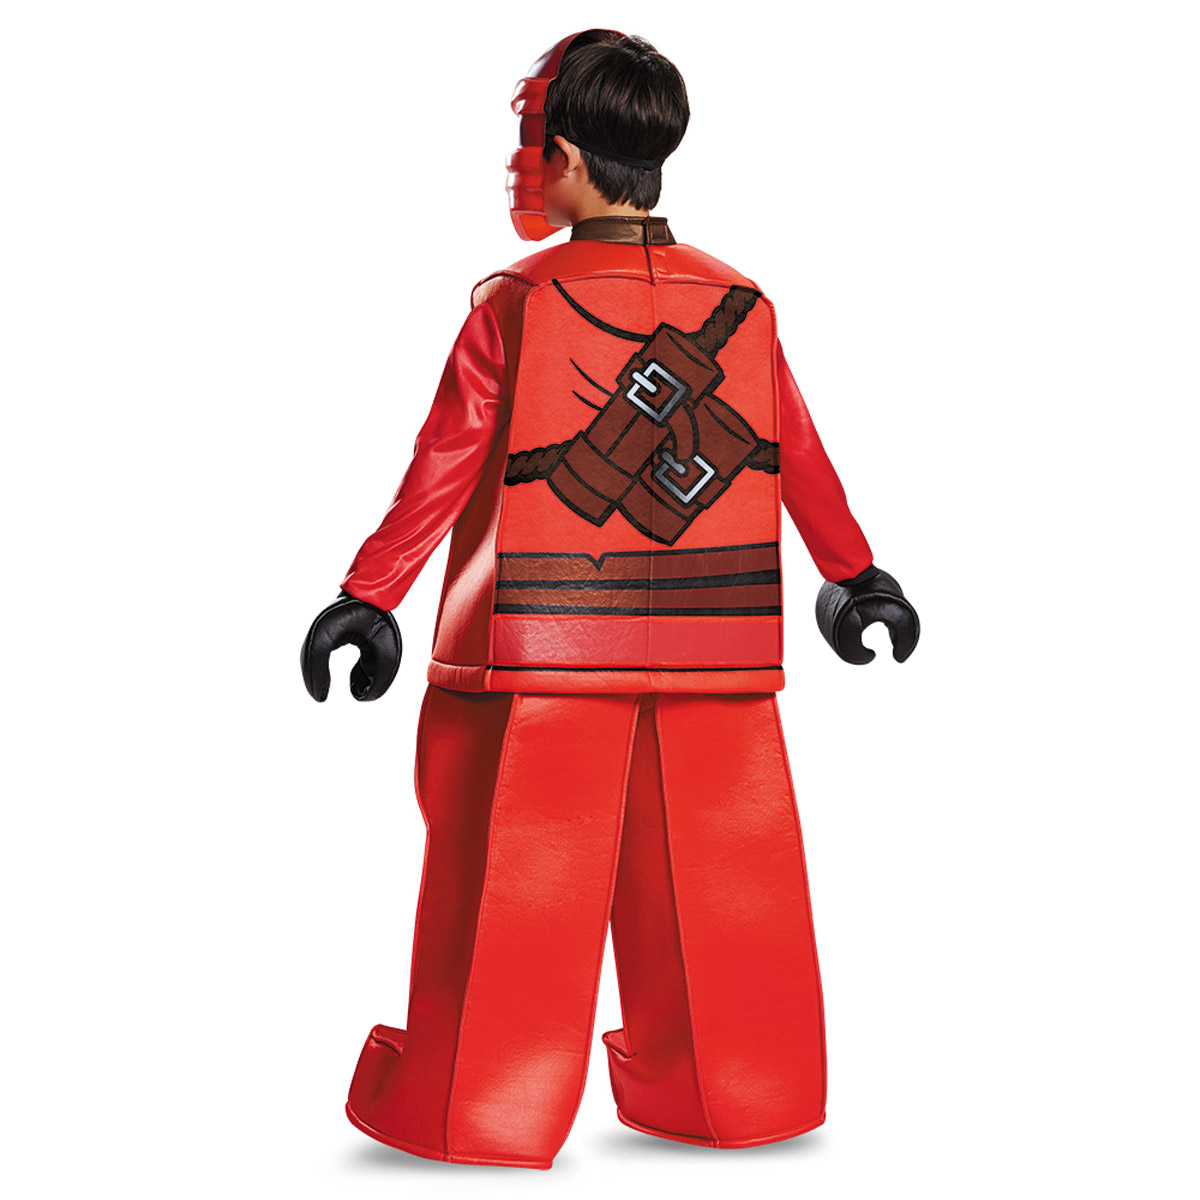 Kai Prestige Ninjago Red LEGO Child CostumeDisguise 99084 